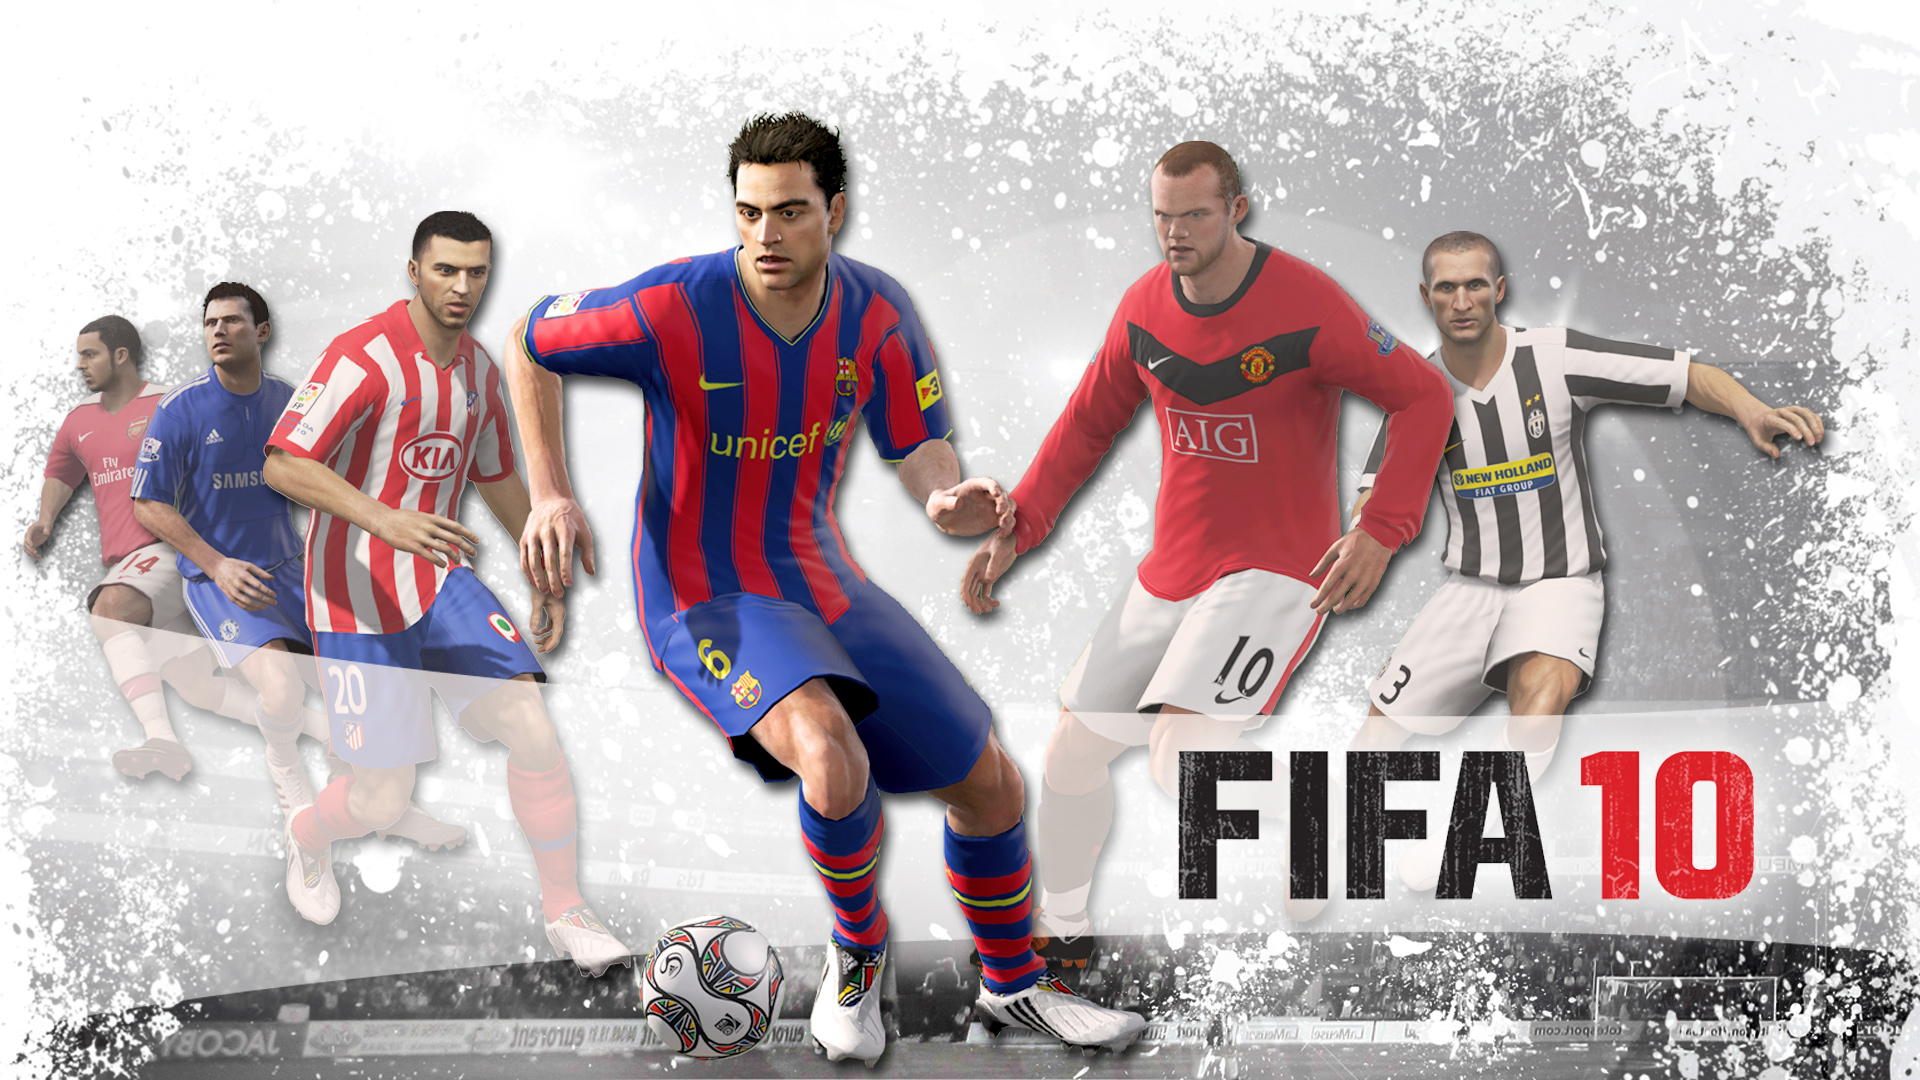 Fifa windows 10. FIFA 10. ФИФА 10 игра. FIFA 10 обложка. ФИФА 2010 обложка.